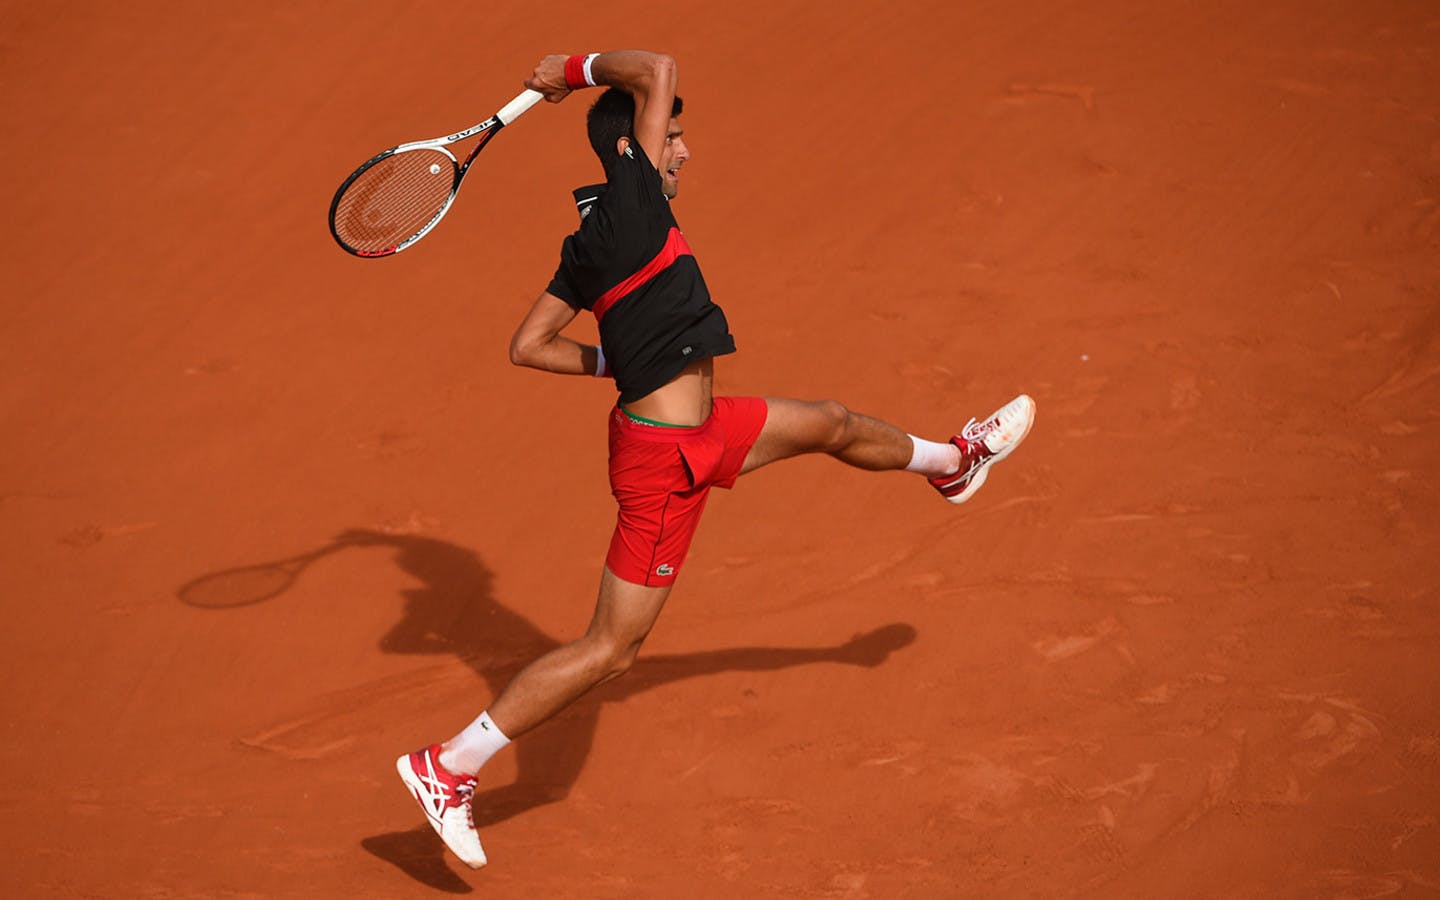 Novak Djokovic lors de son huitièmes de finale, Roland-Garros 2018